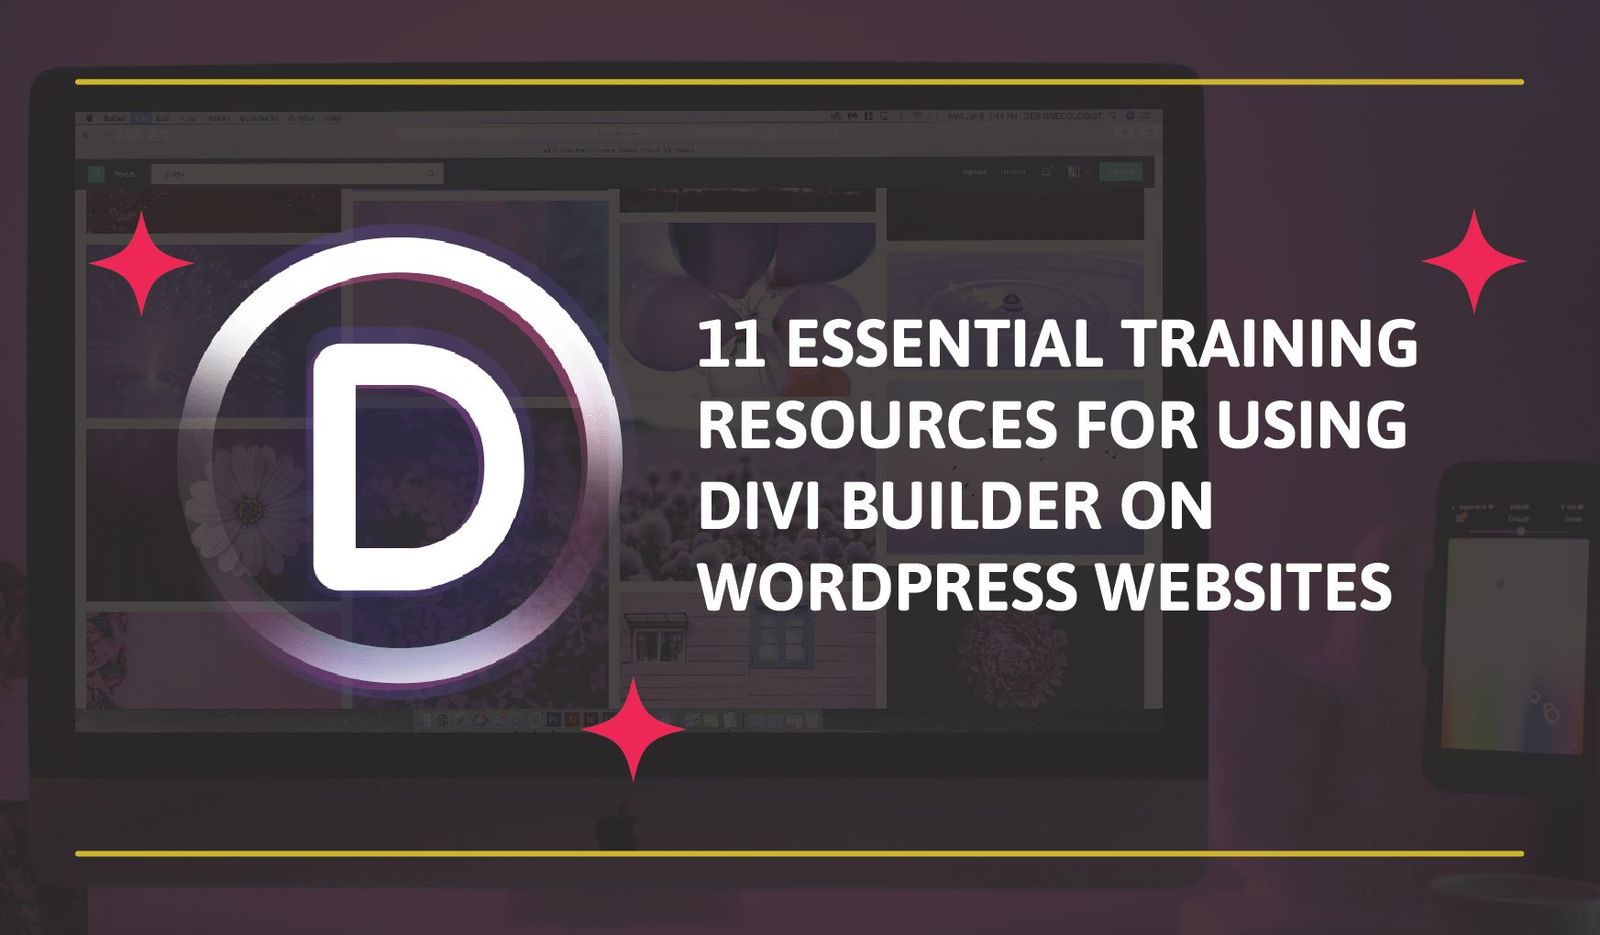 11 essential training resources for DIVI builder on WordPress websites